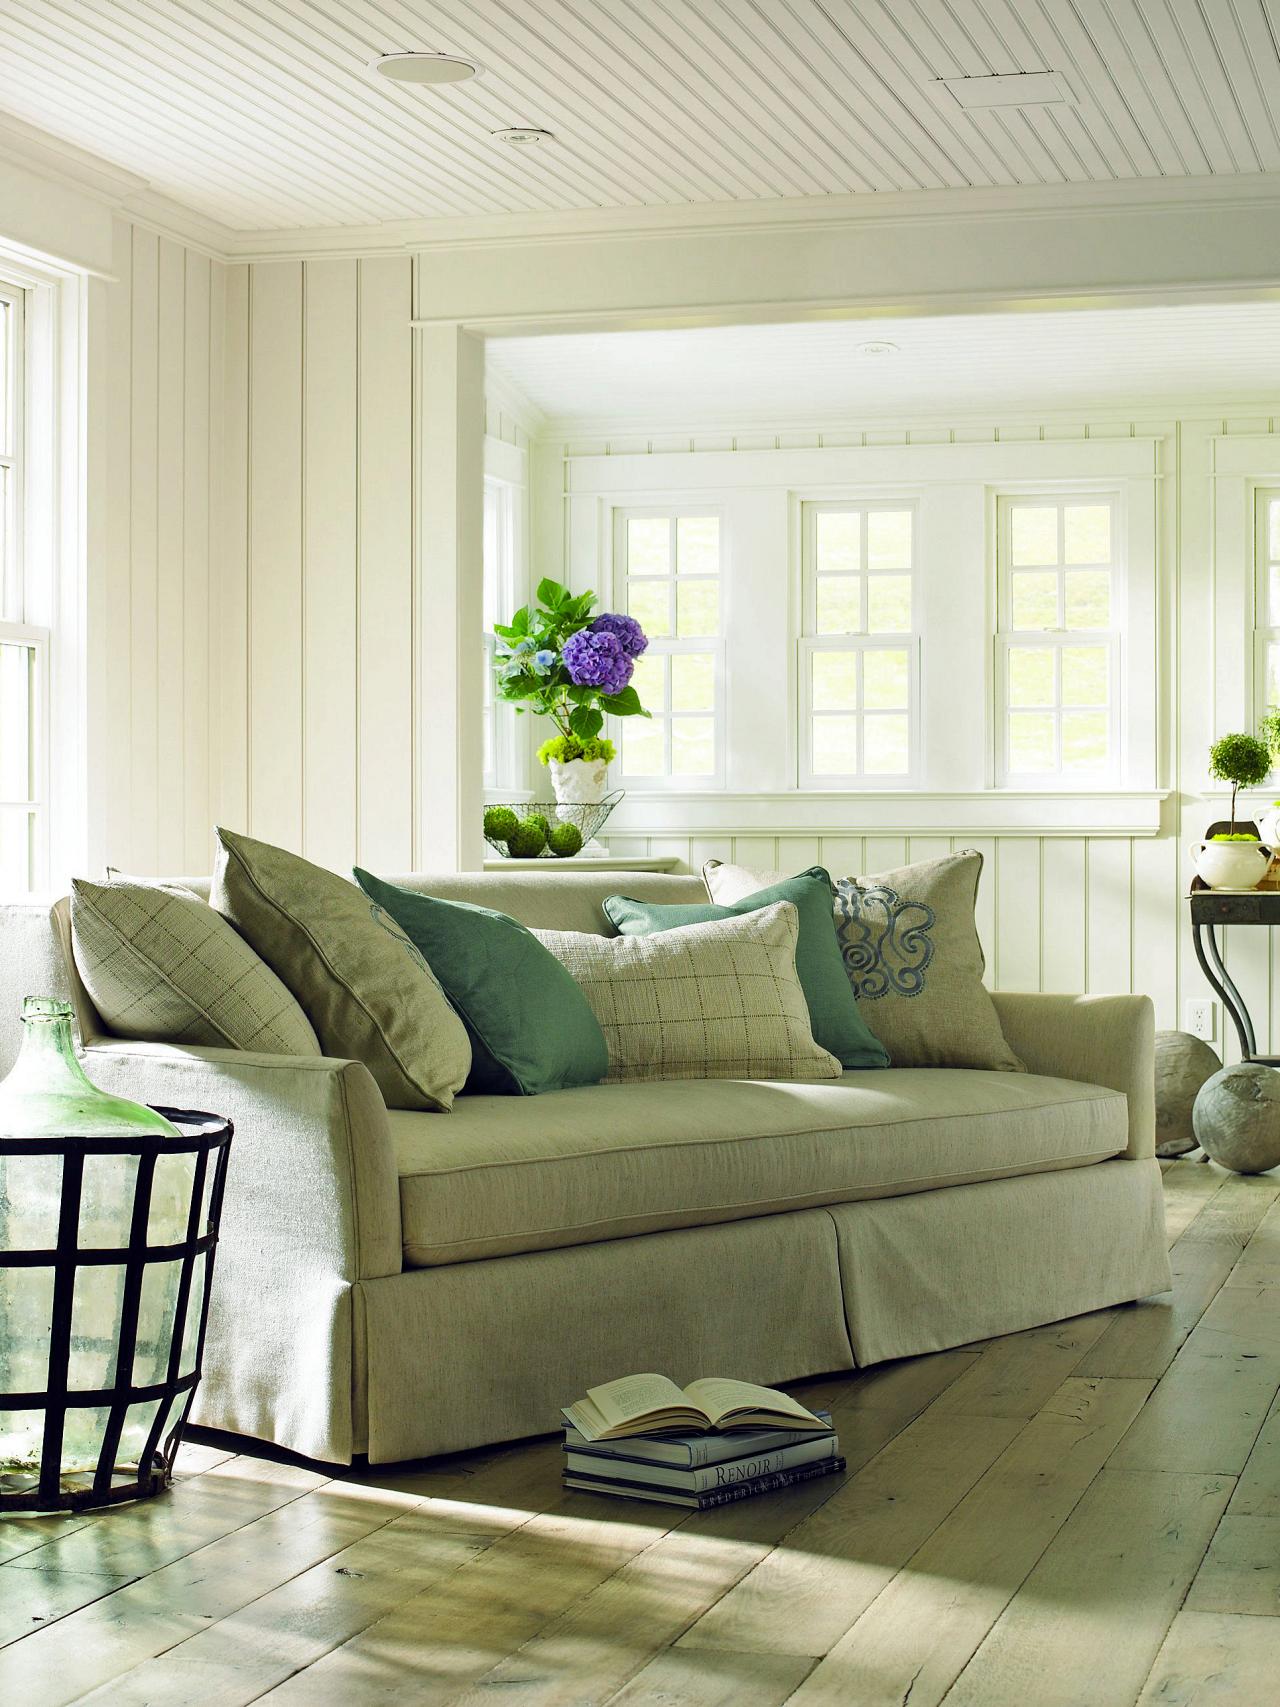 25 Shabby-Chic Style Living Room Design Ideas - Decoration Love